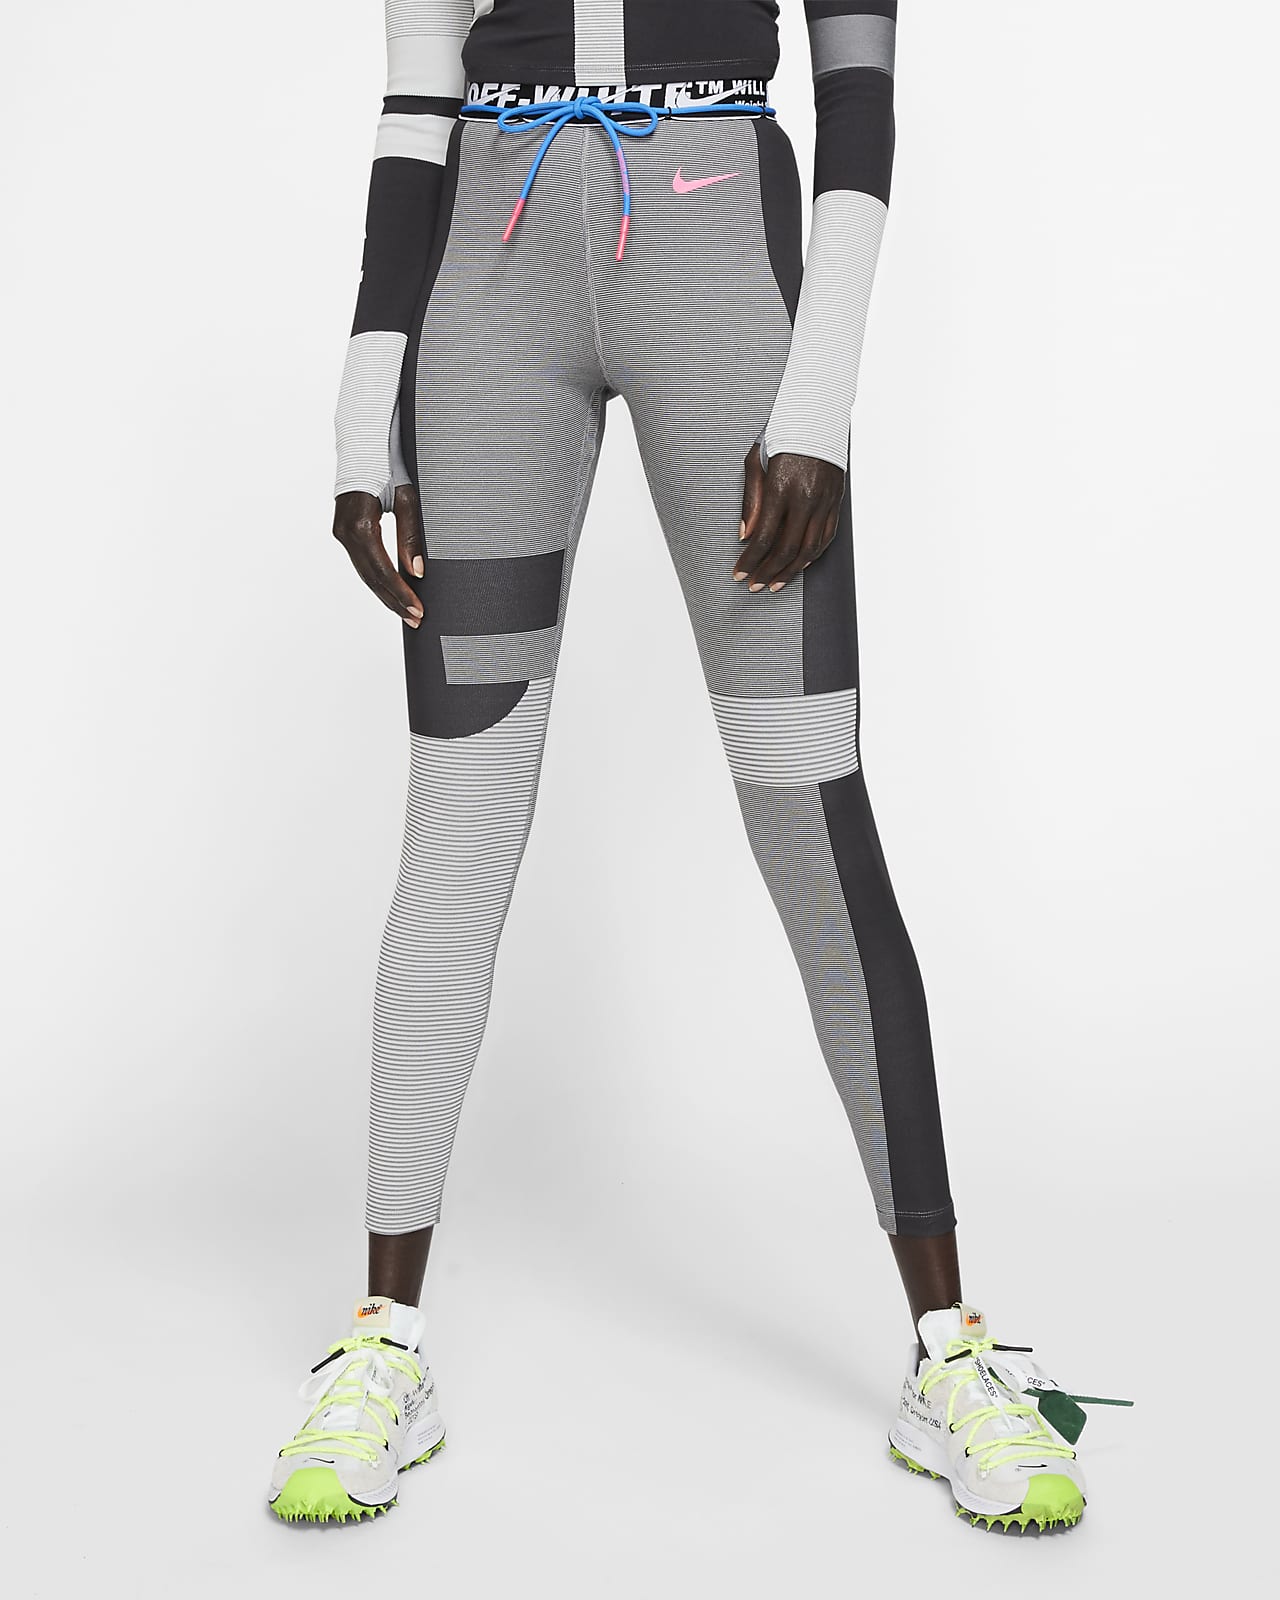 Women's Running Tights. Nike ID